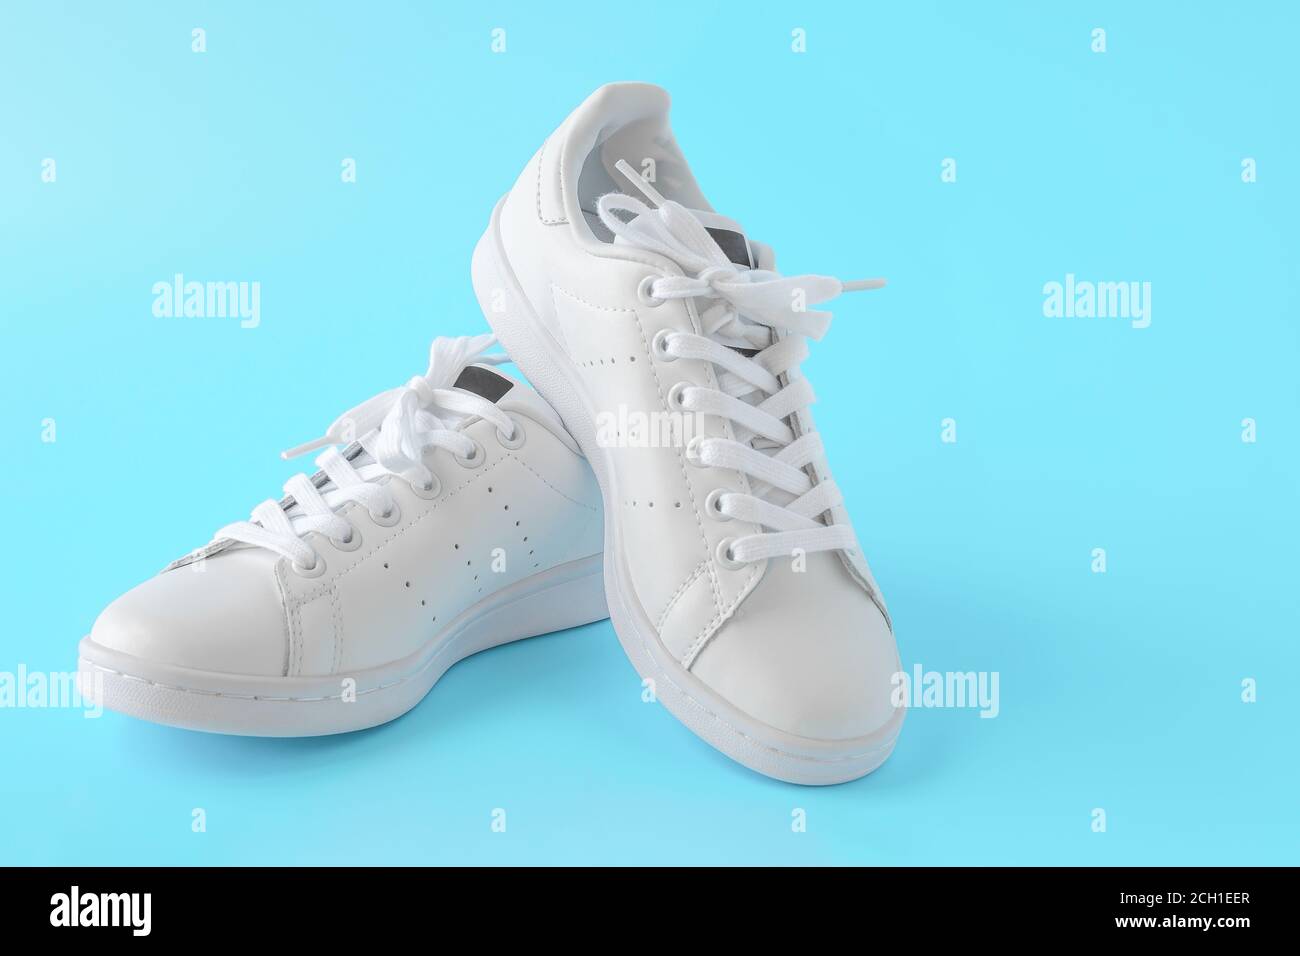 Paio di nuove sneaker bianche su sfondo blu. Nuove scarpe sportive in pelle bianca. Scarpe sportive per running, tennis, jogging. CopySpace Foto Stock